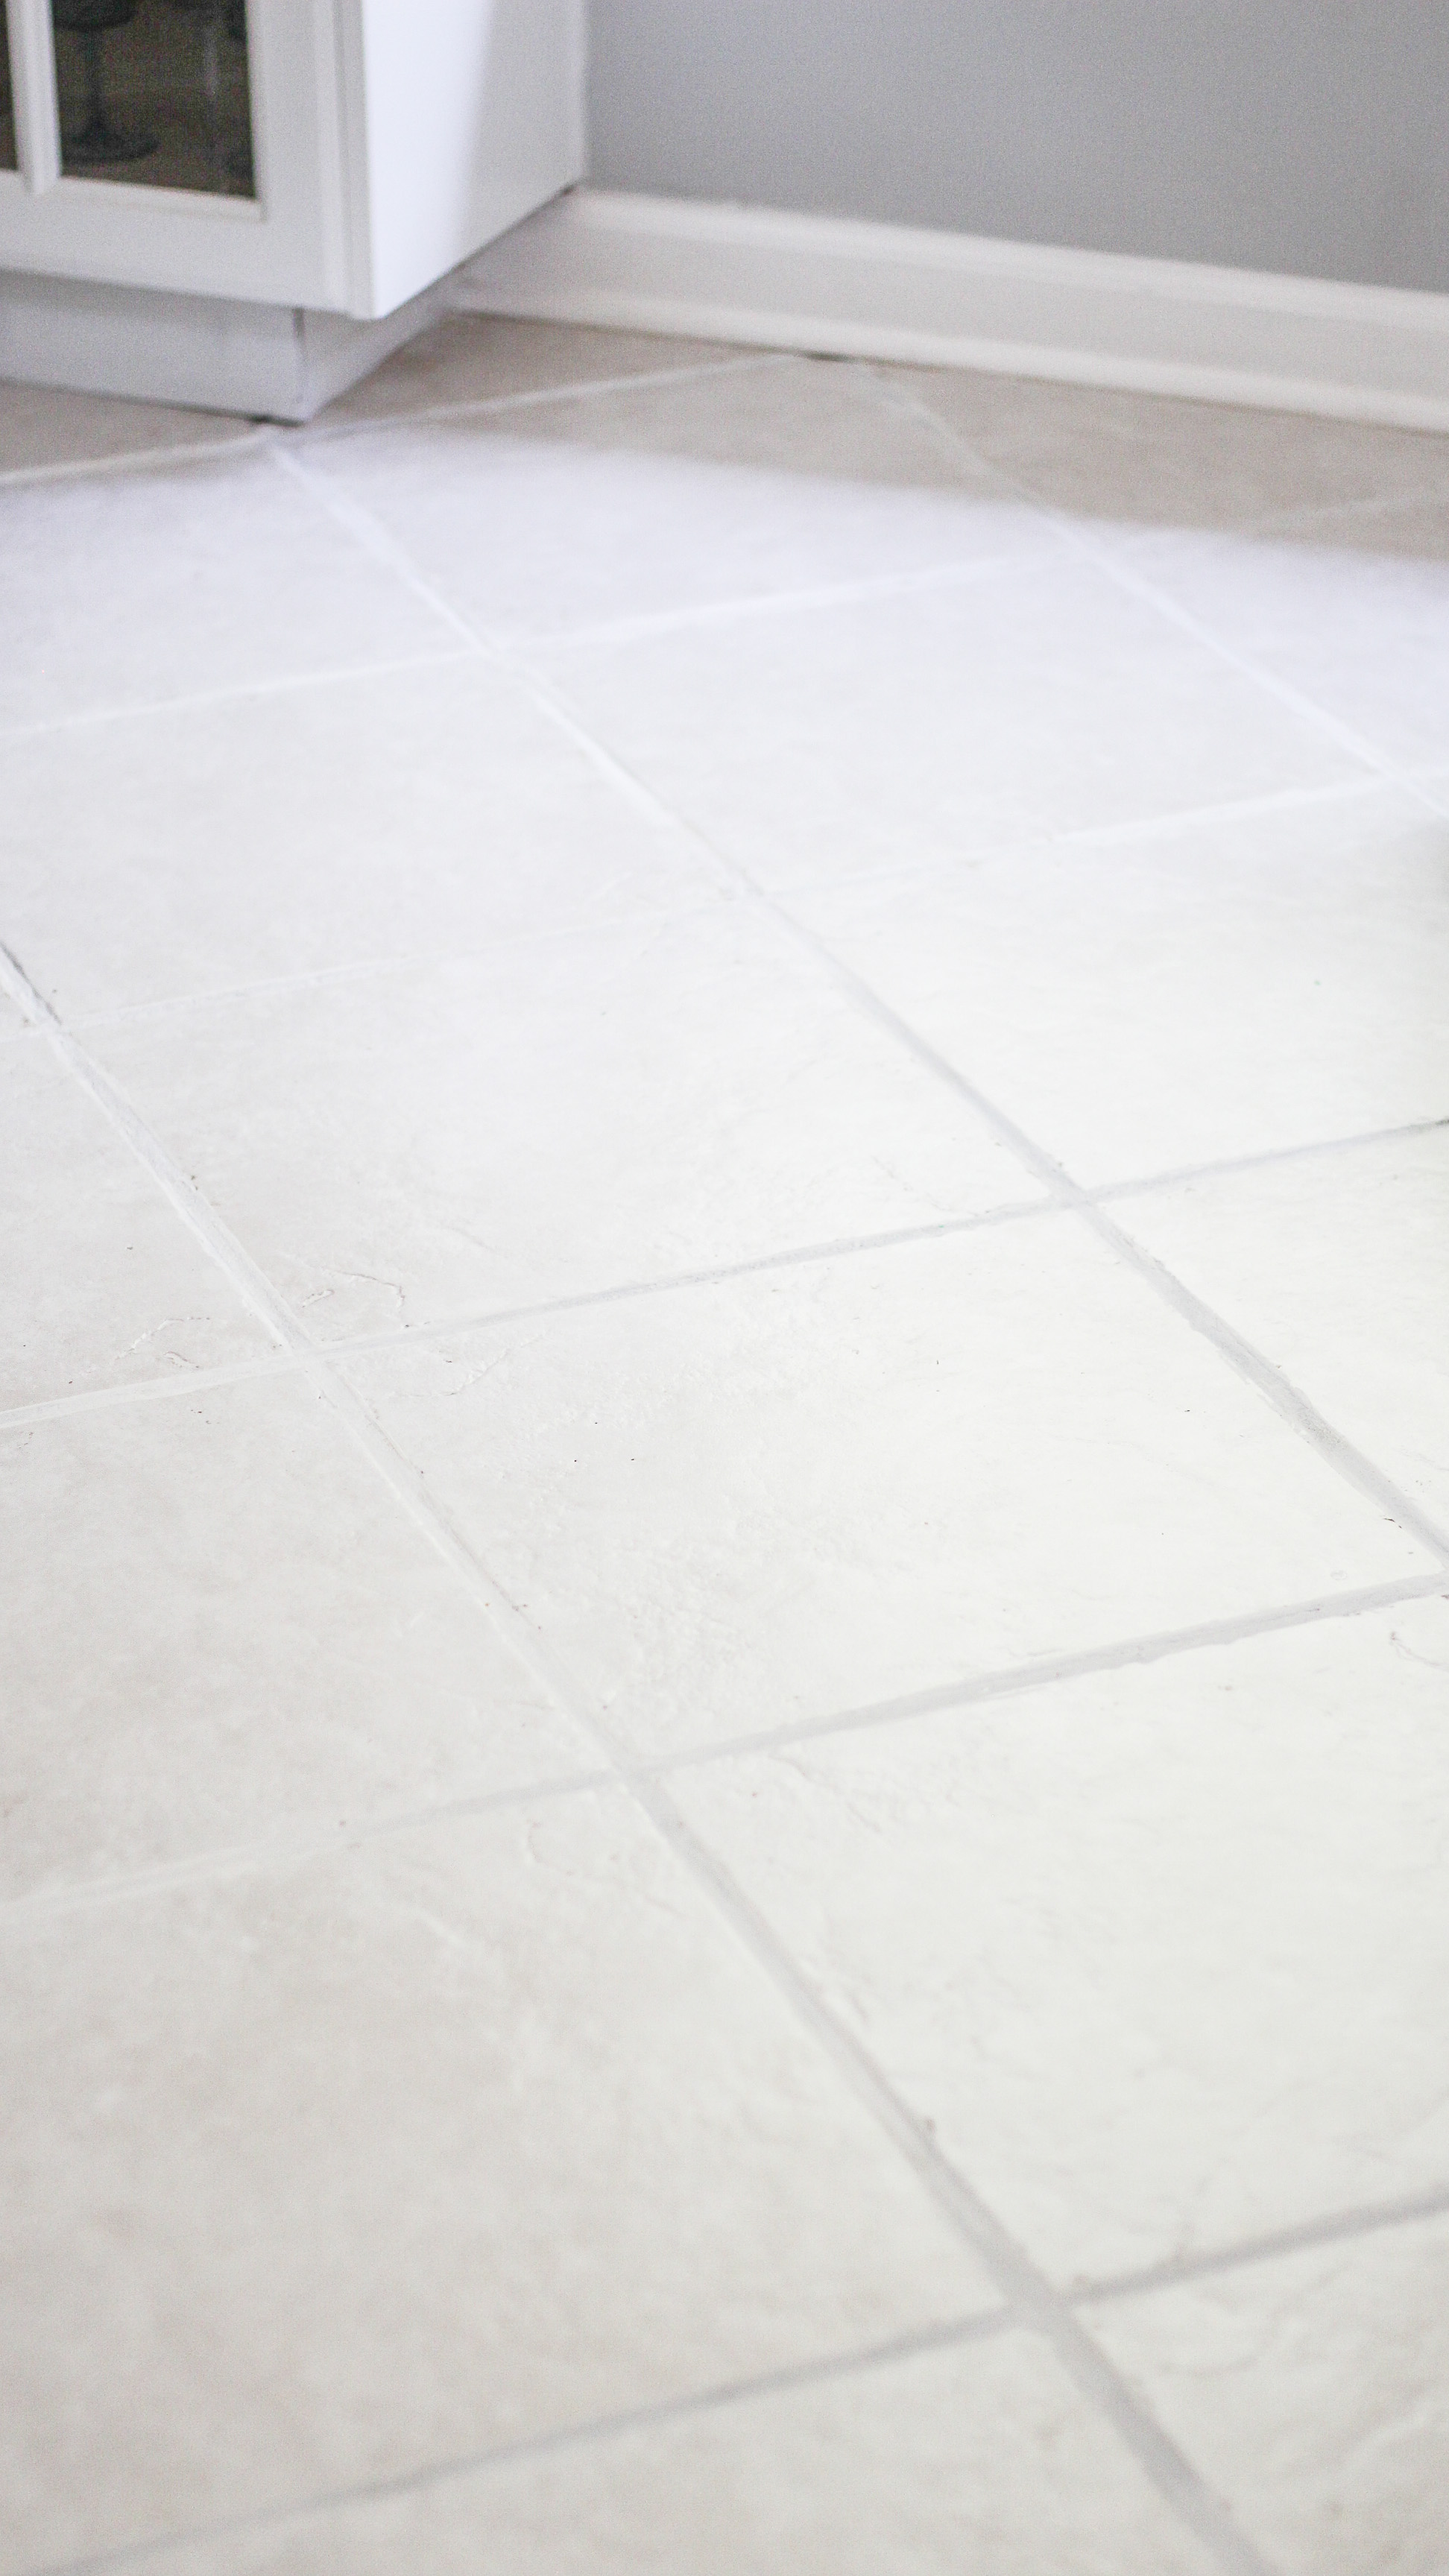 Neglected Tile Flooring, Easiest Way To Clean Floor Tiles